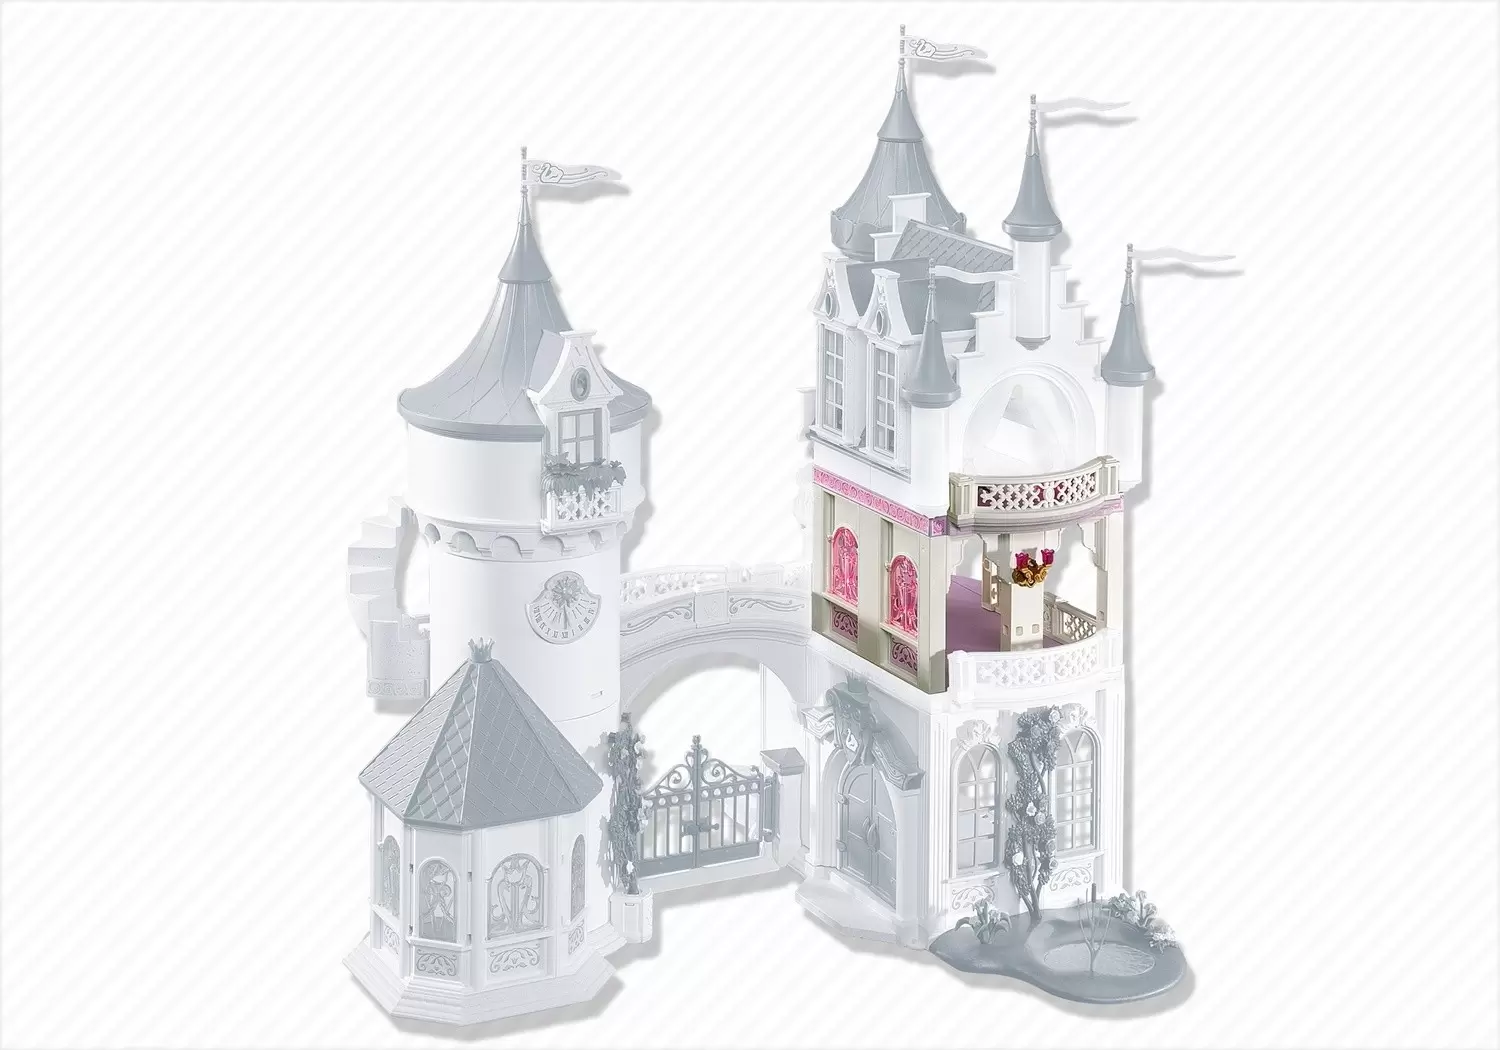 Extension for Princess Fantasy Castle (5142) - Accessories & decorations 6236